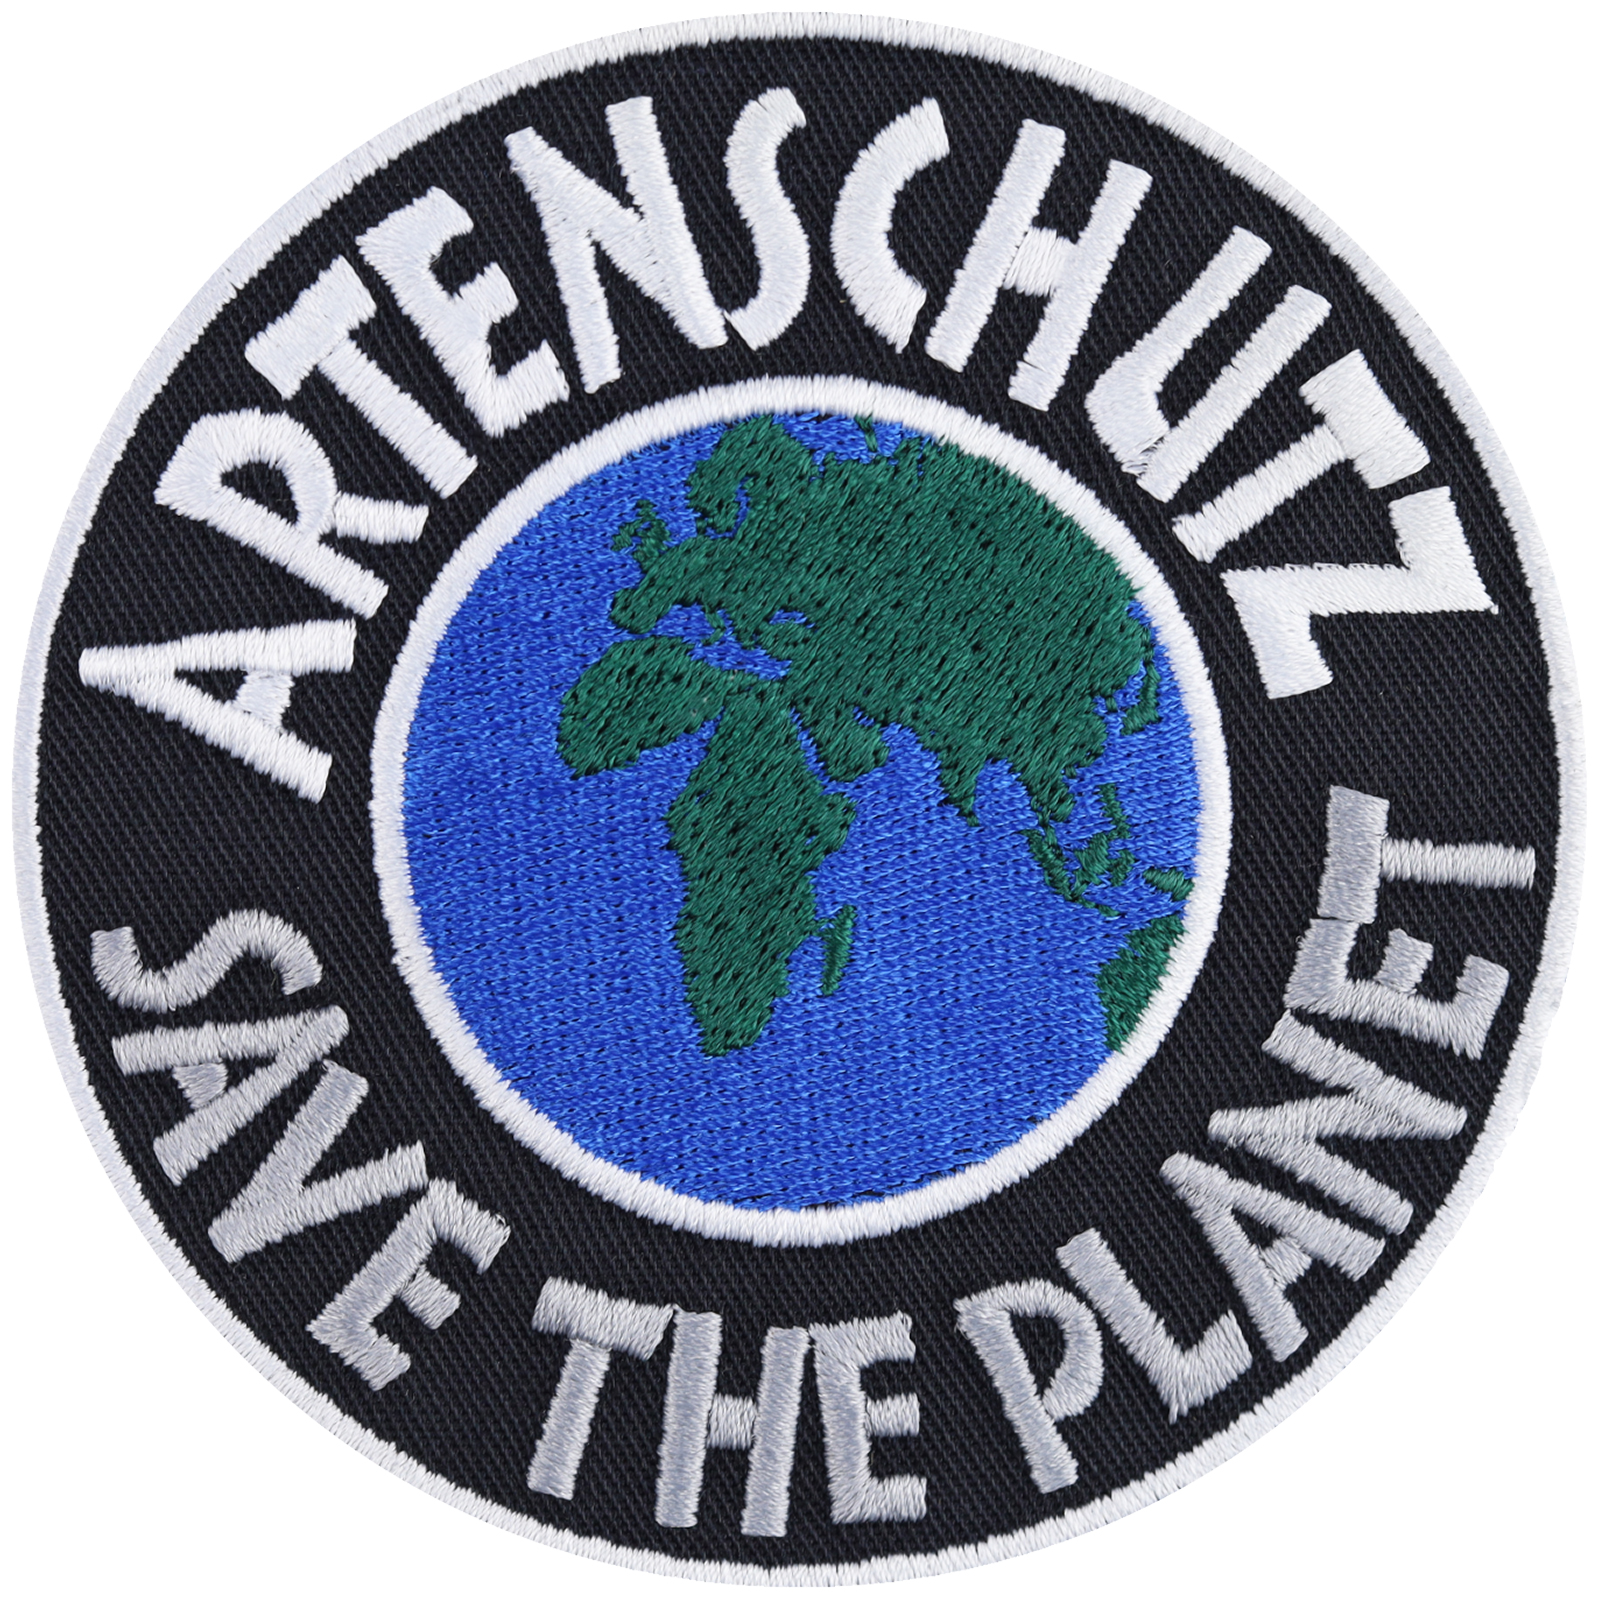 Artenschutz - Save the planet - Patch